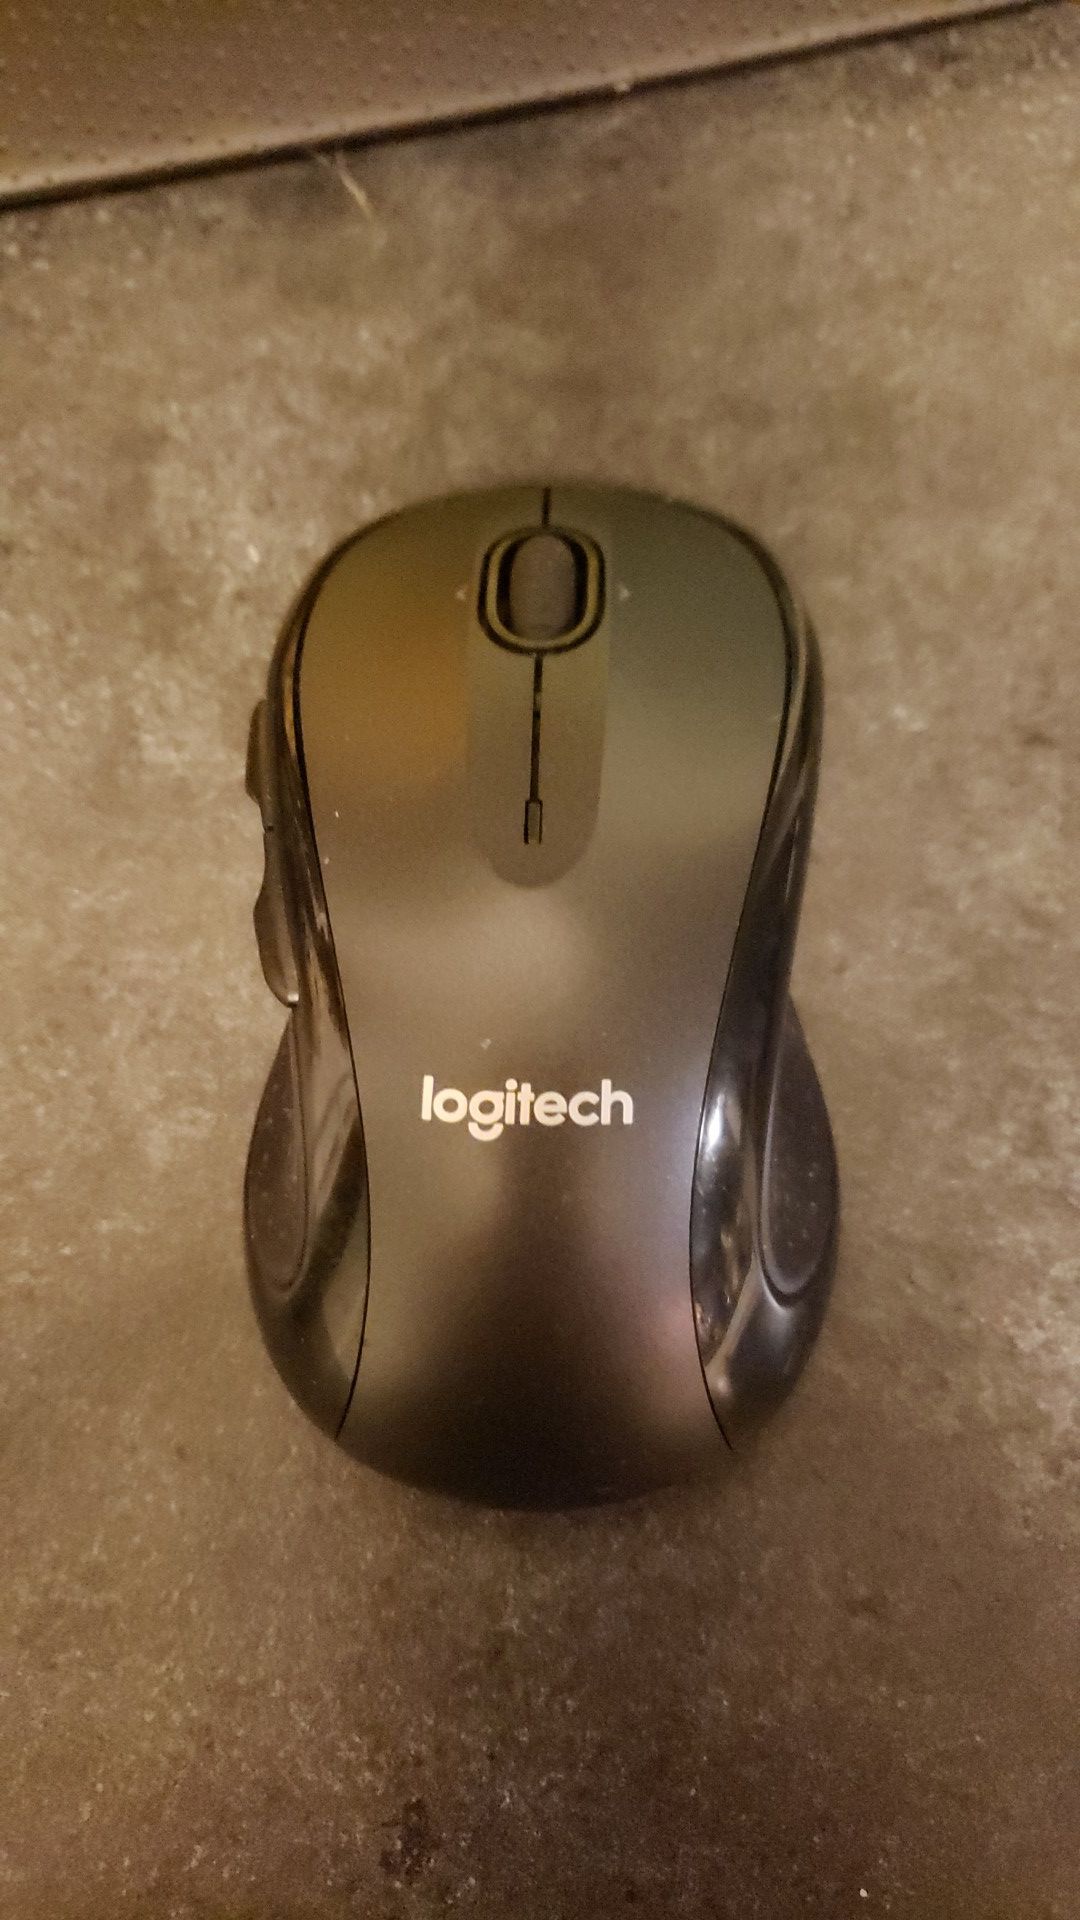 Wireless Logitech mouse